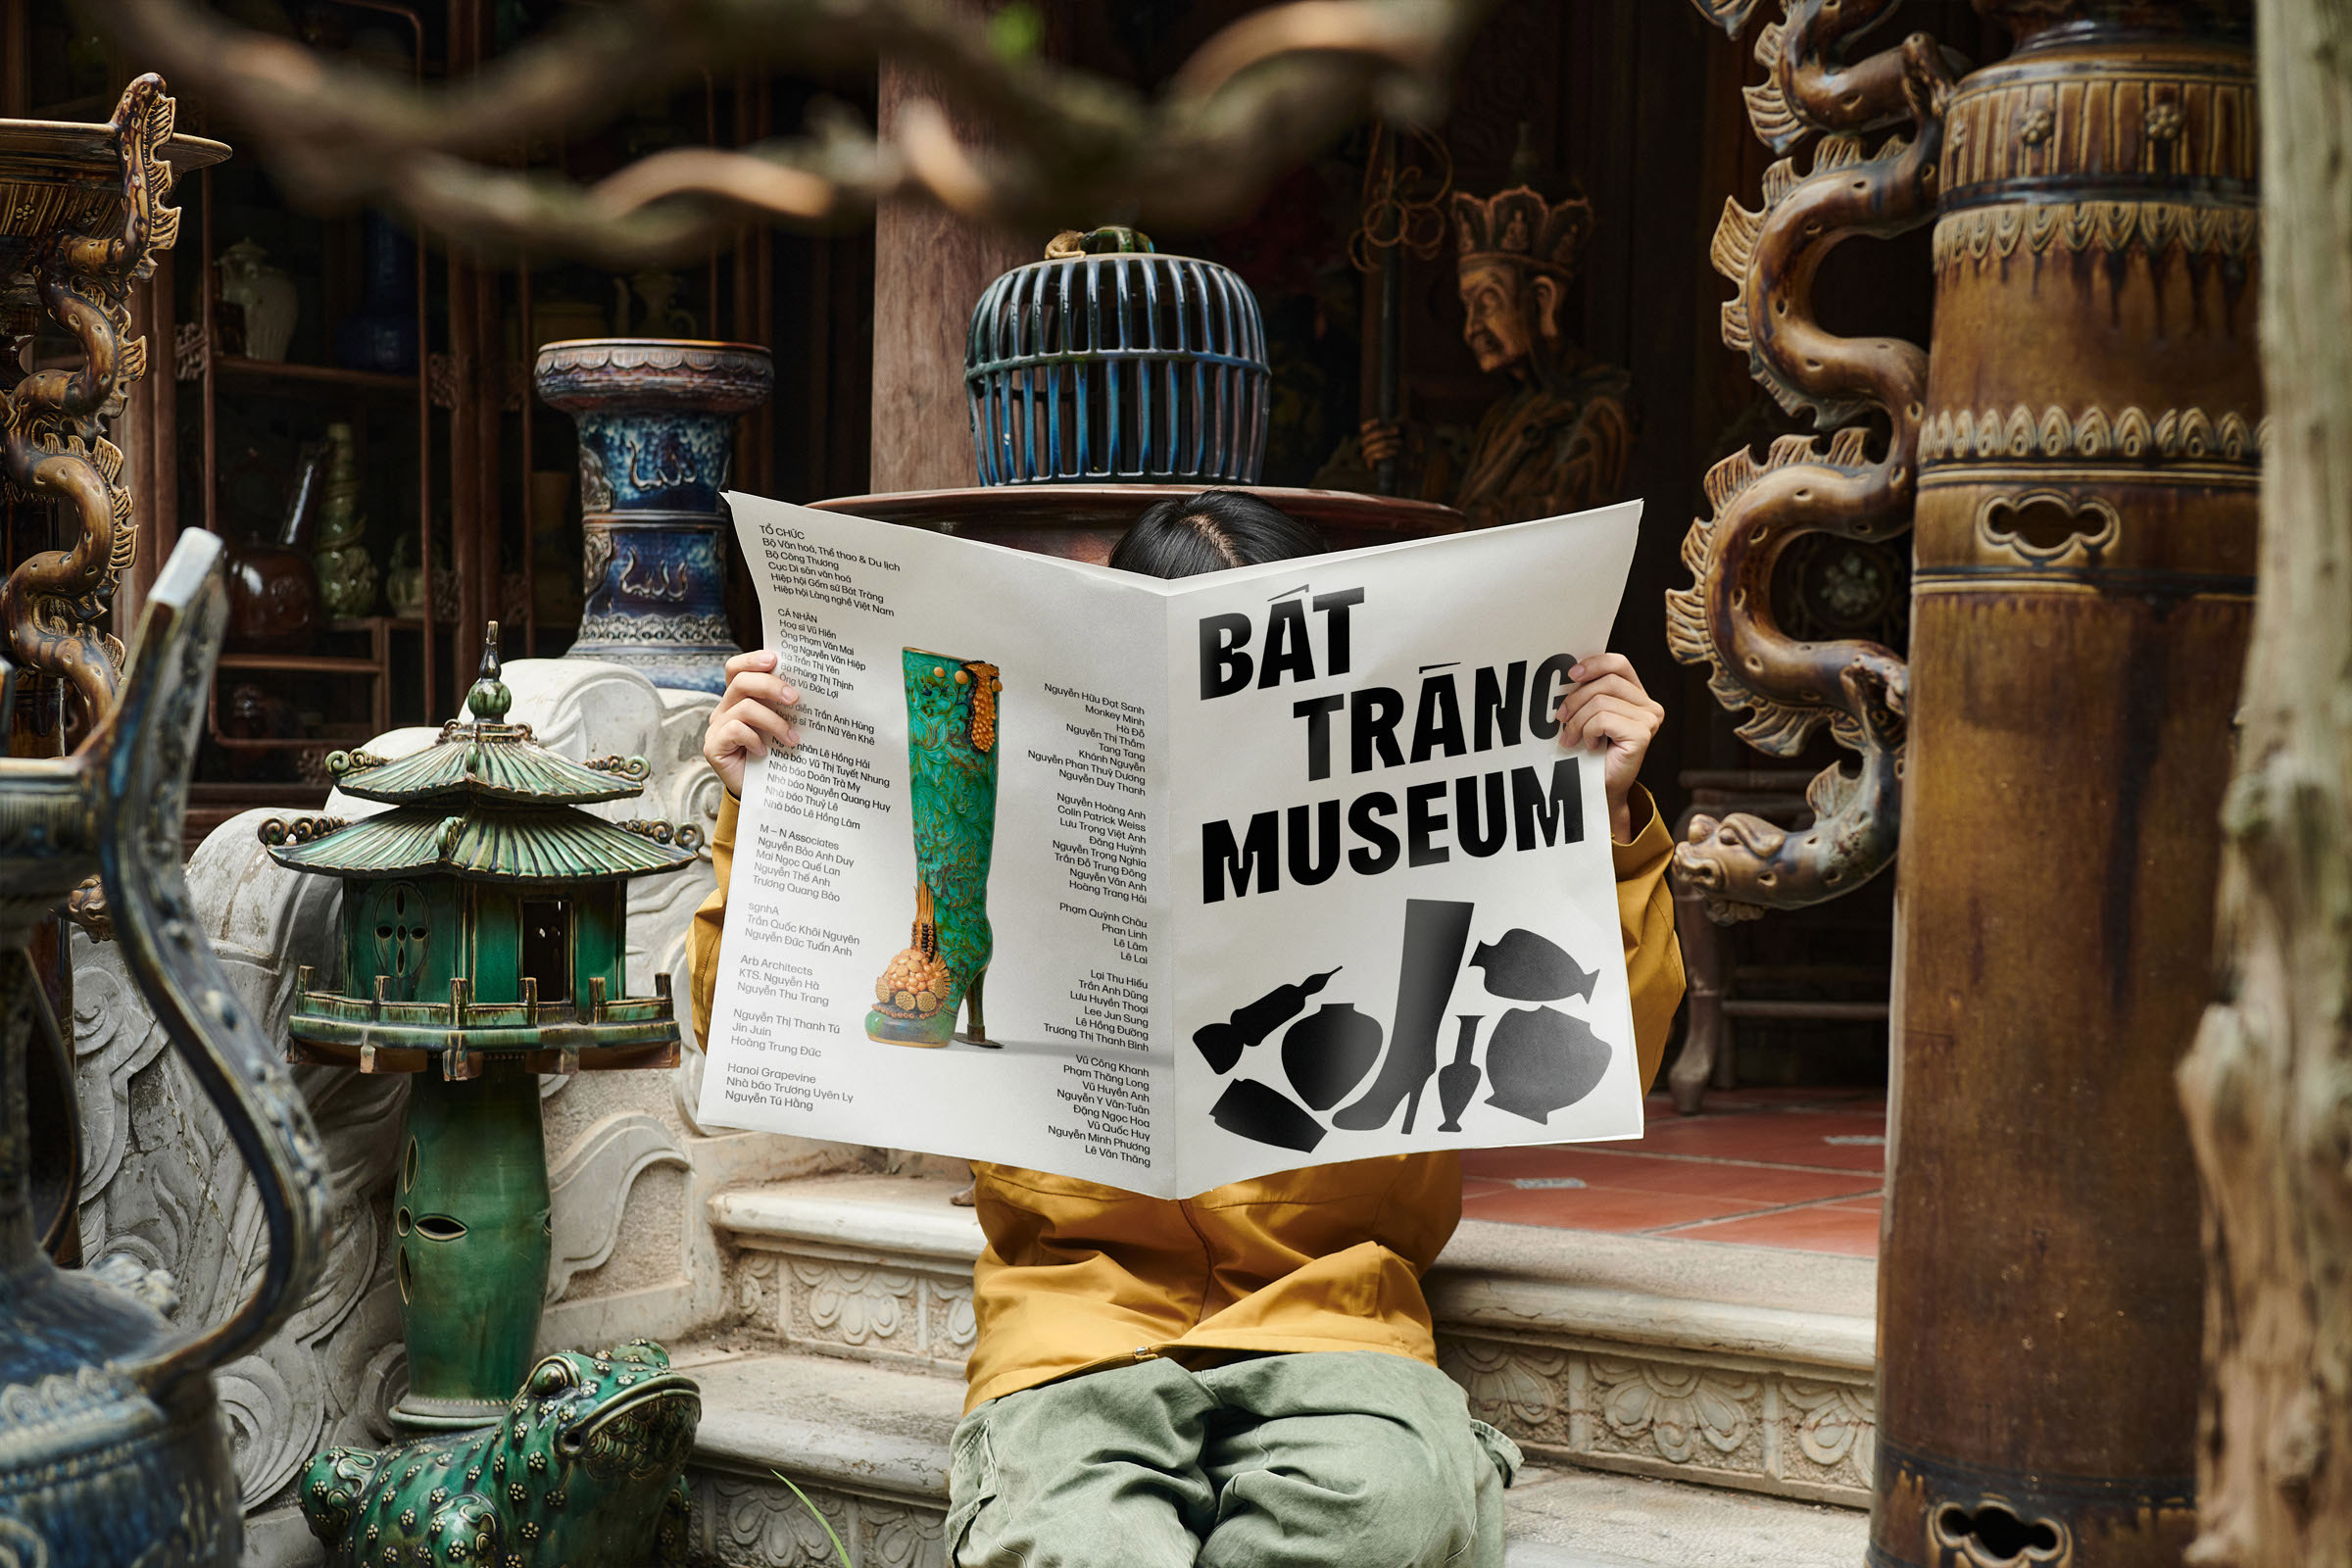 Bat Trang Museum